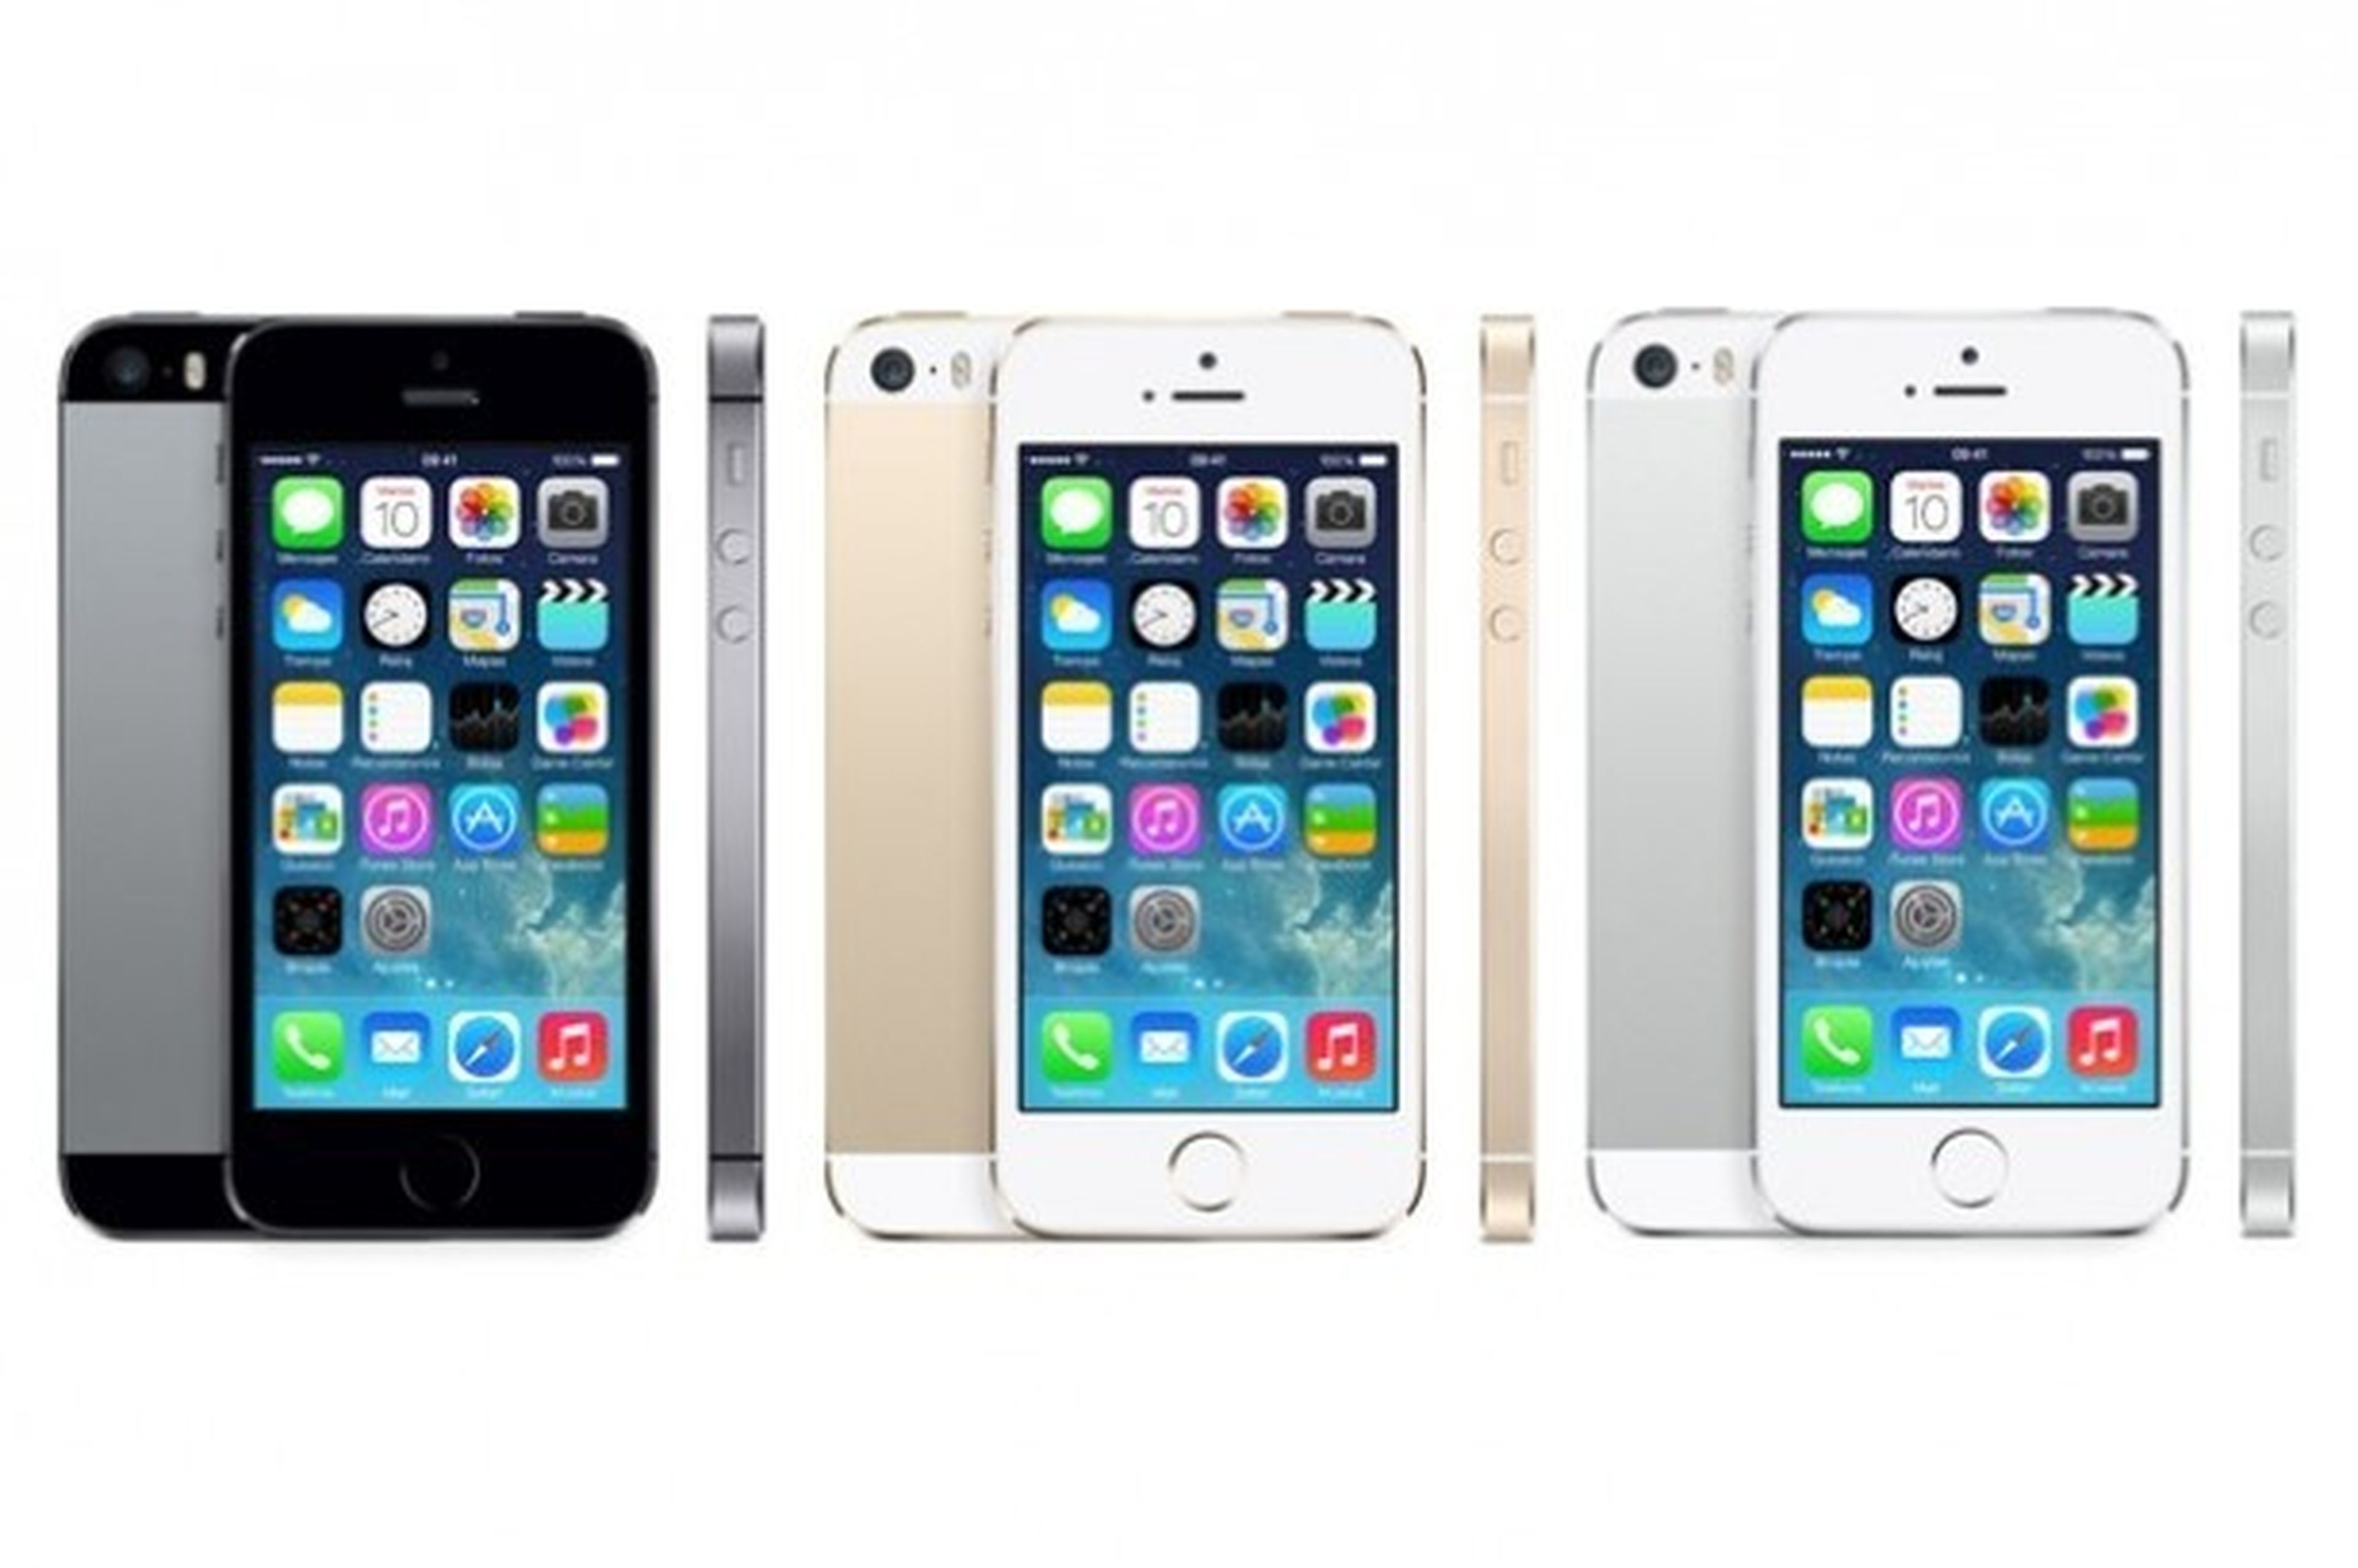 IPhone 5S y iPhone 5C venden 9 millones en un fin de semana